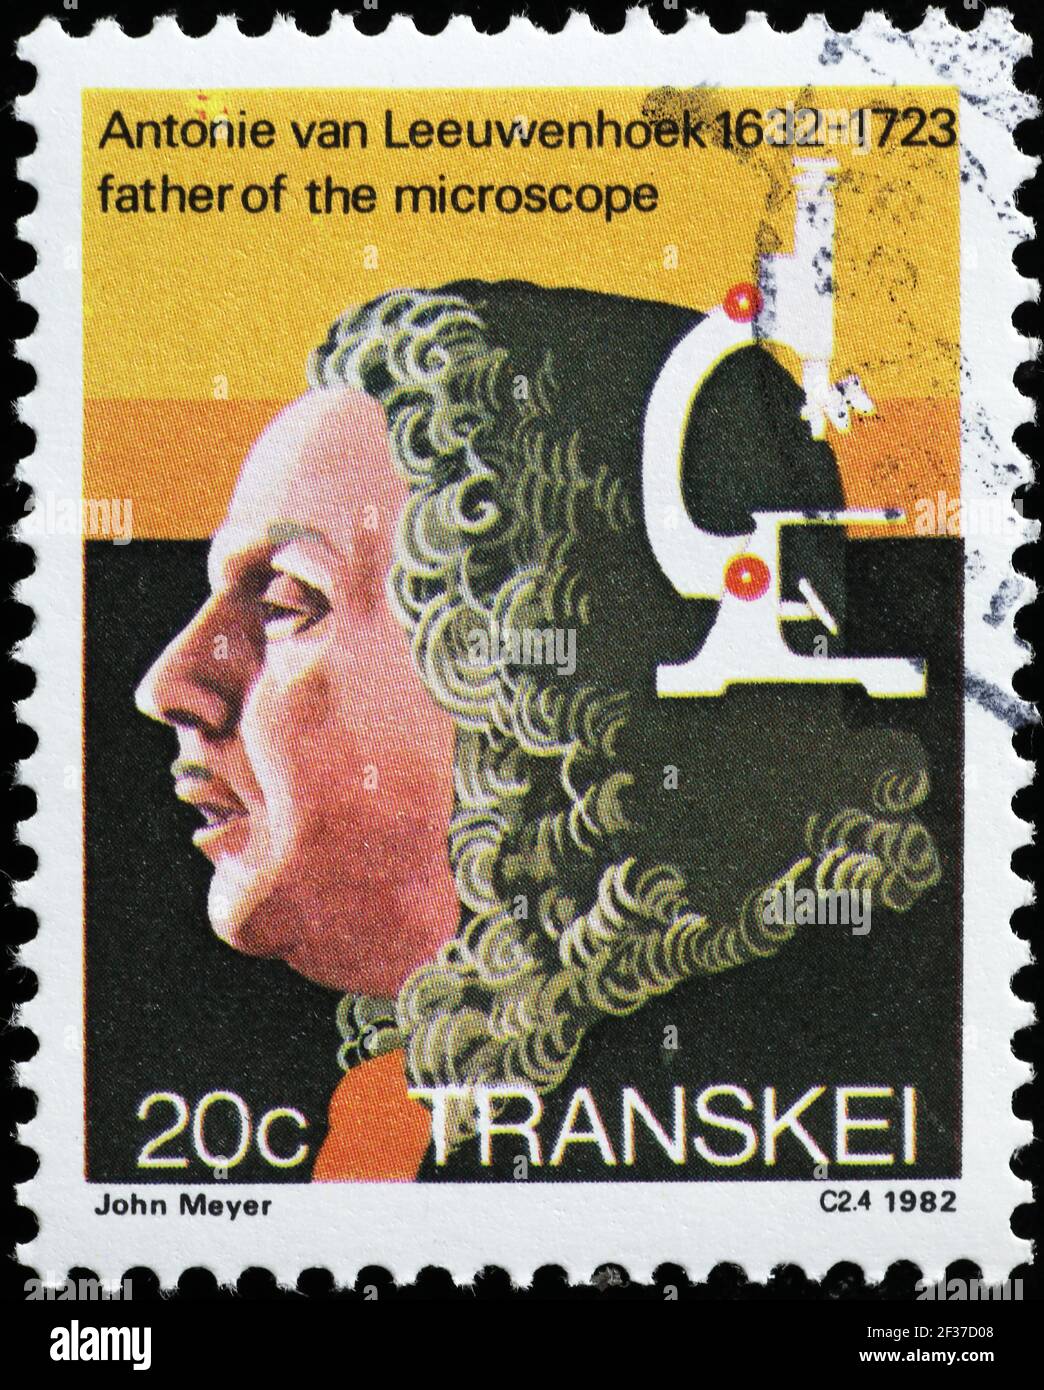 Antonie van Leeuwenhoek, father of the microscope on stamp Stock Photo